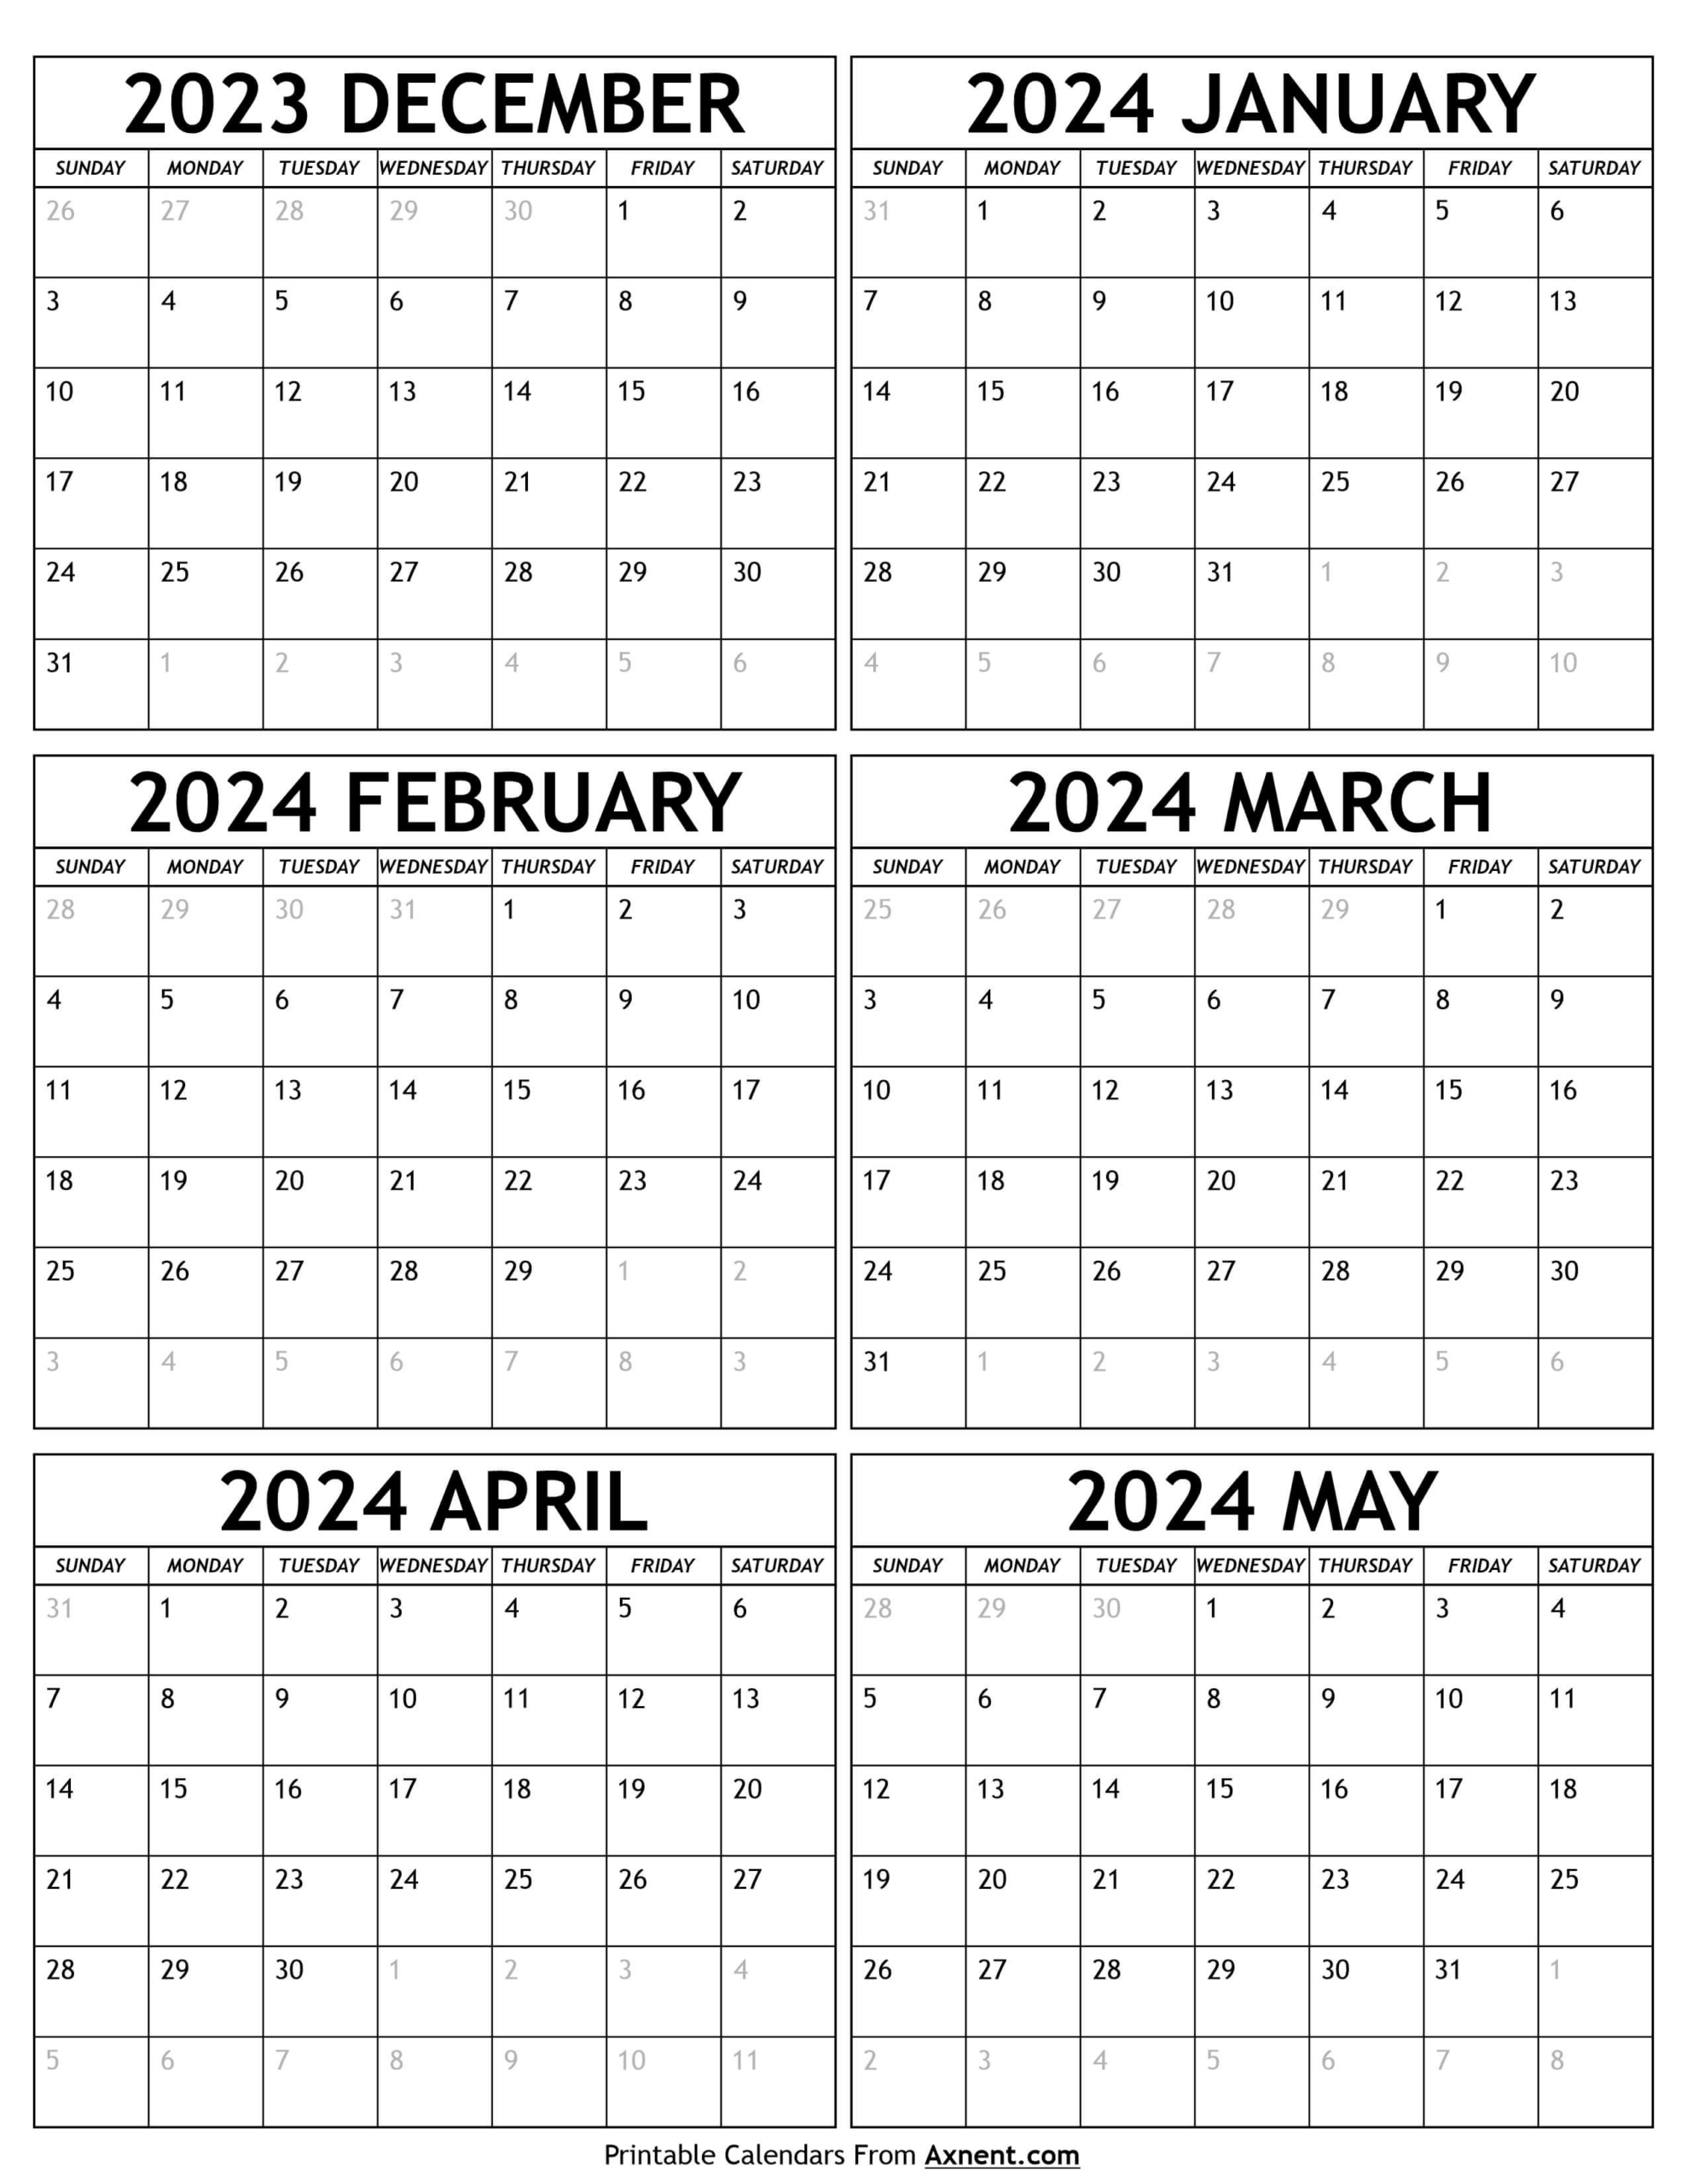 December 2023 To May 2024 Calendar Template - Six Months In 2023 | Printable Calendar October 2023 December 2024